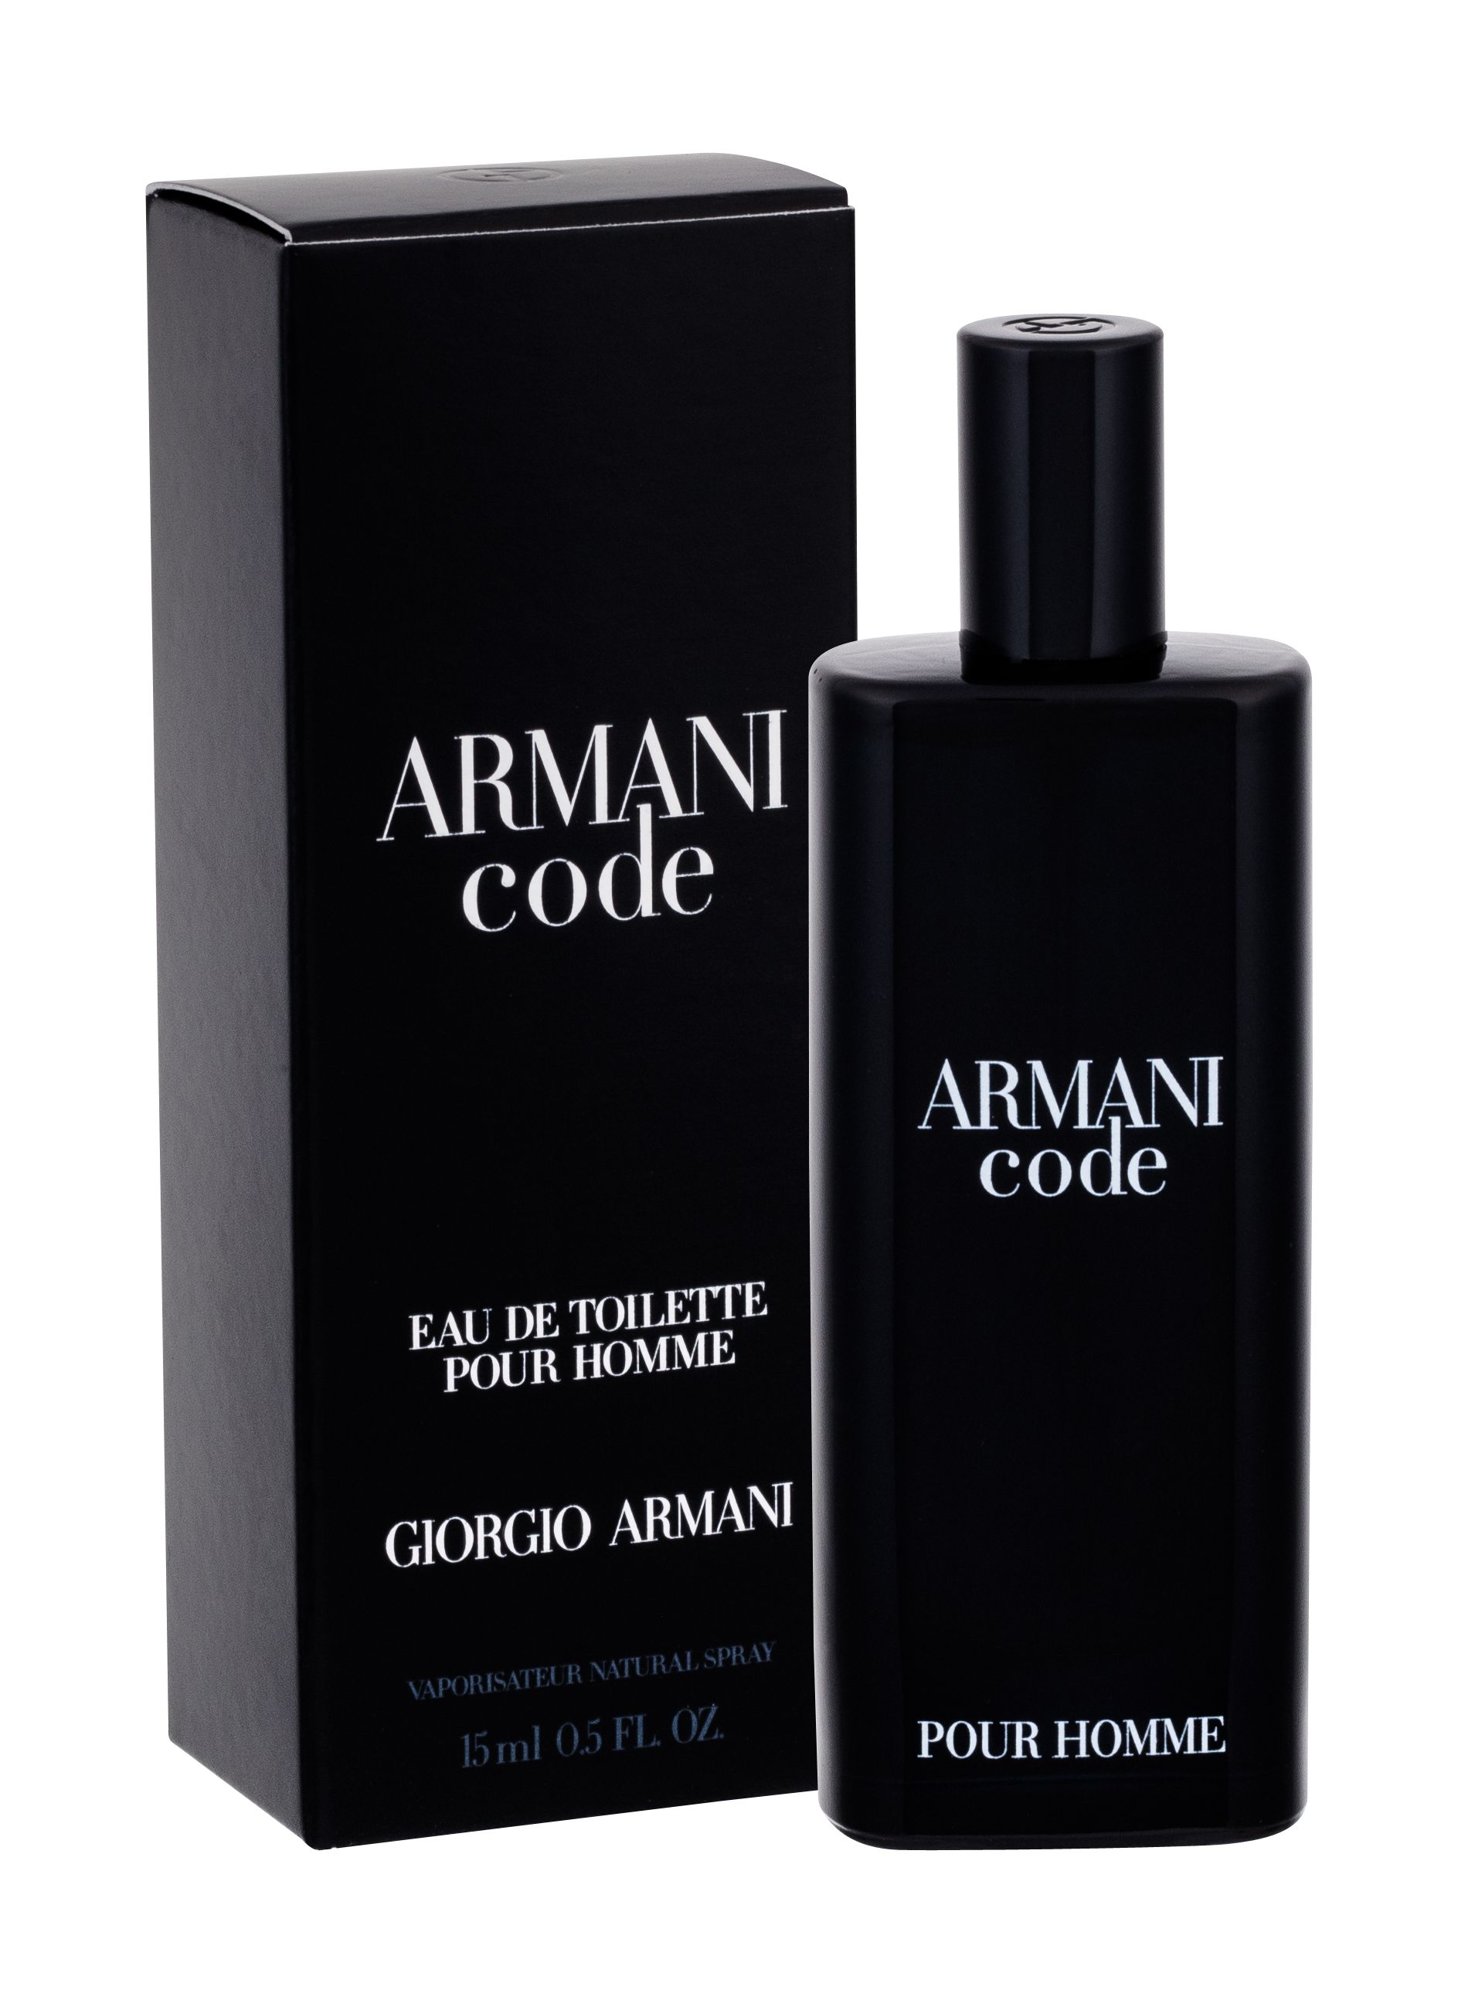 Armani code homme. Armani code EDT. Giorgio Armani туалетная вода Armani code homme. Giorgio Armani code Eau Toilette pour homme. Armani Armani code pour homme.